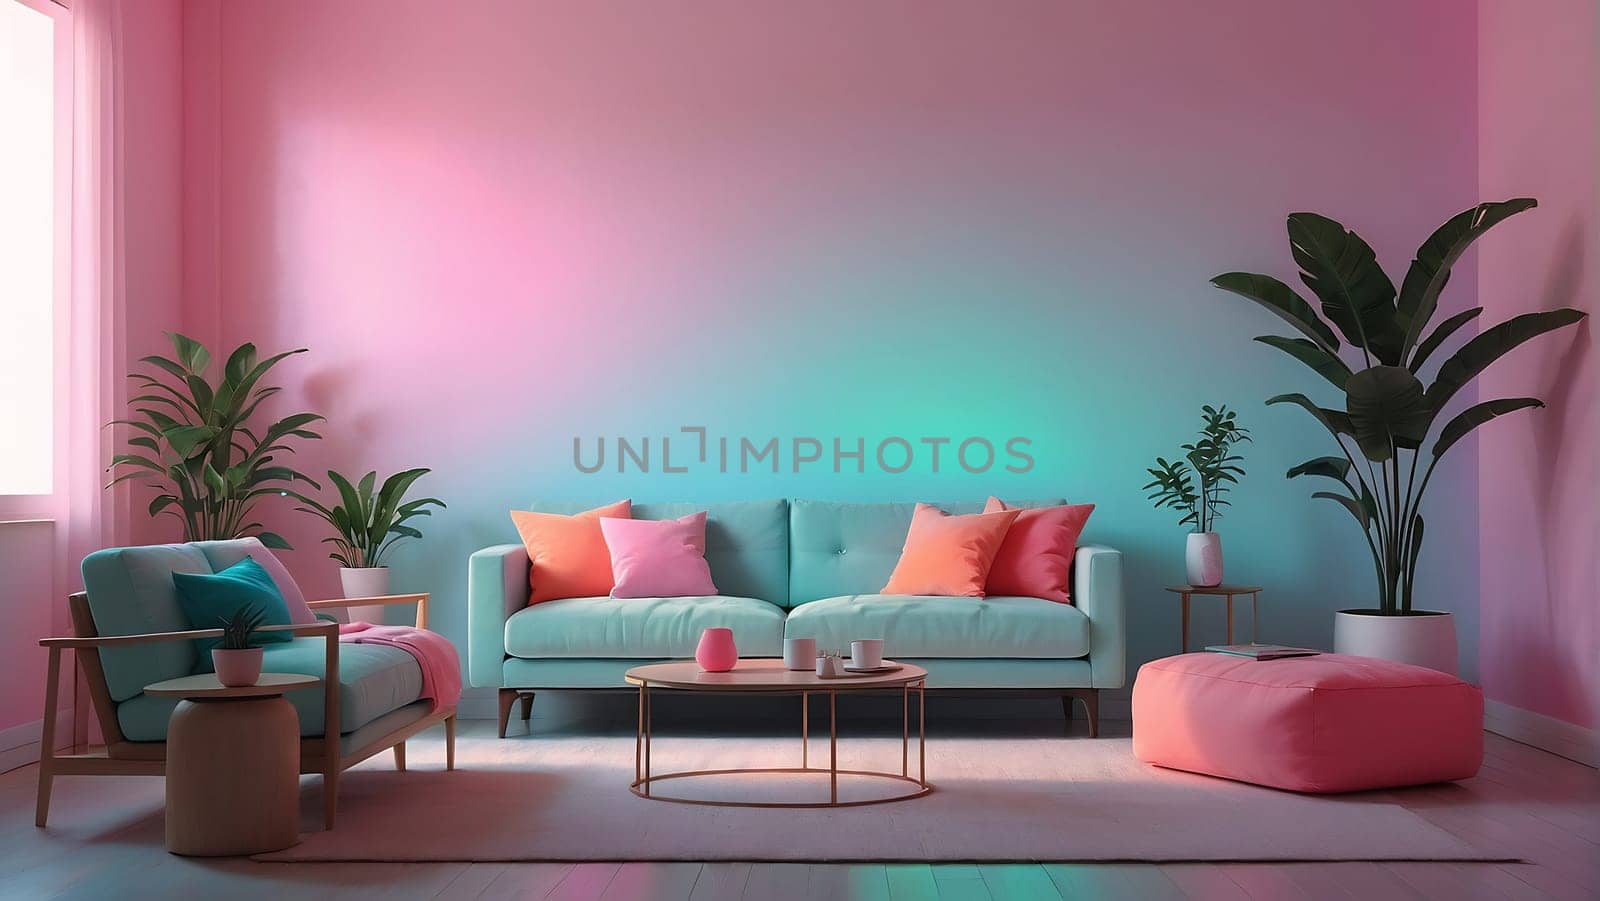 Aesthetic minimalist Cyberpunk interior design with empty wall mockup in vibrant neon color theme. by maenjari